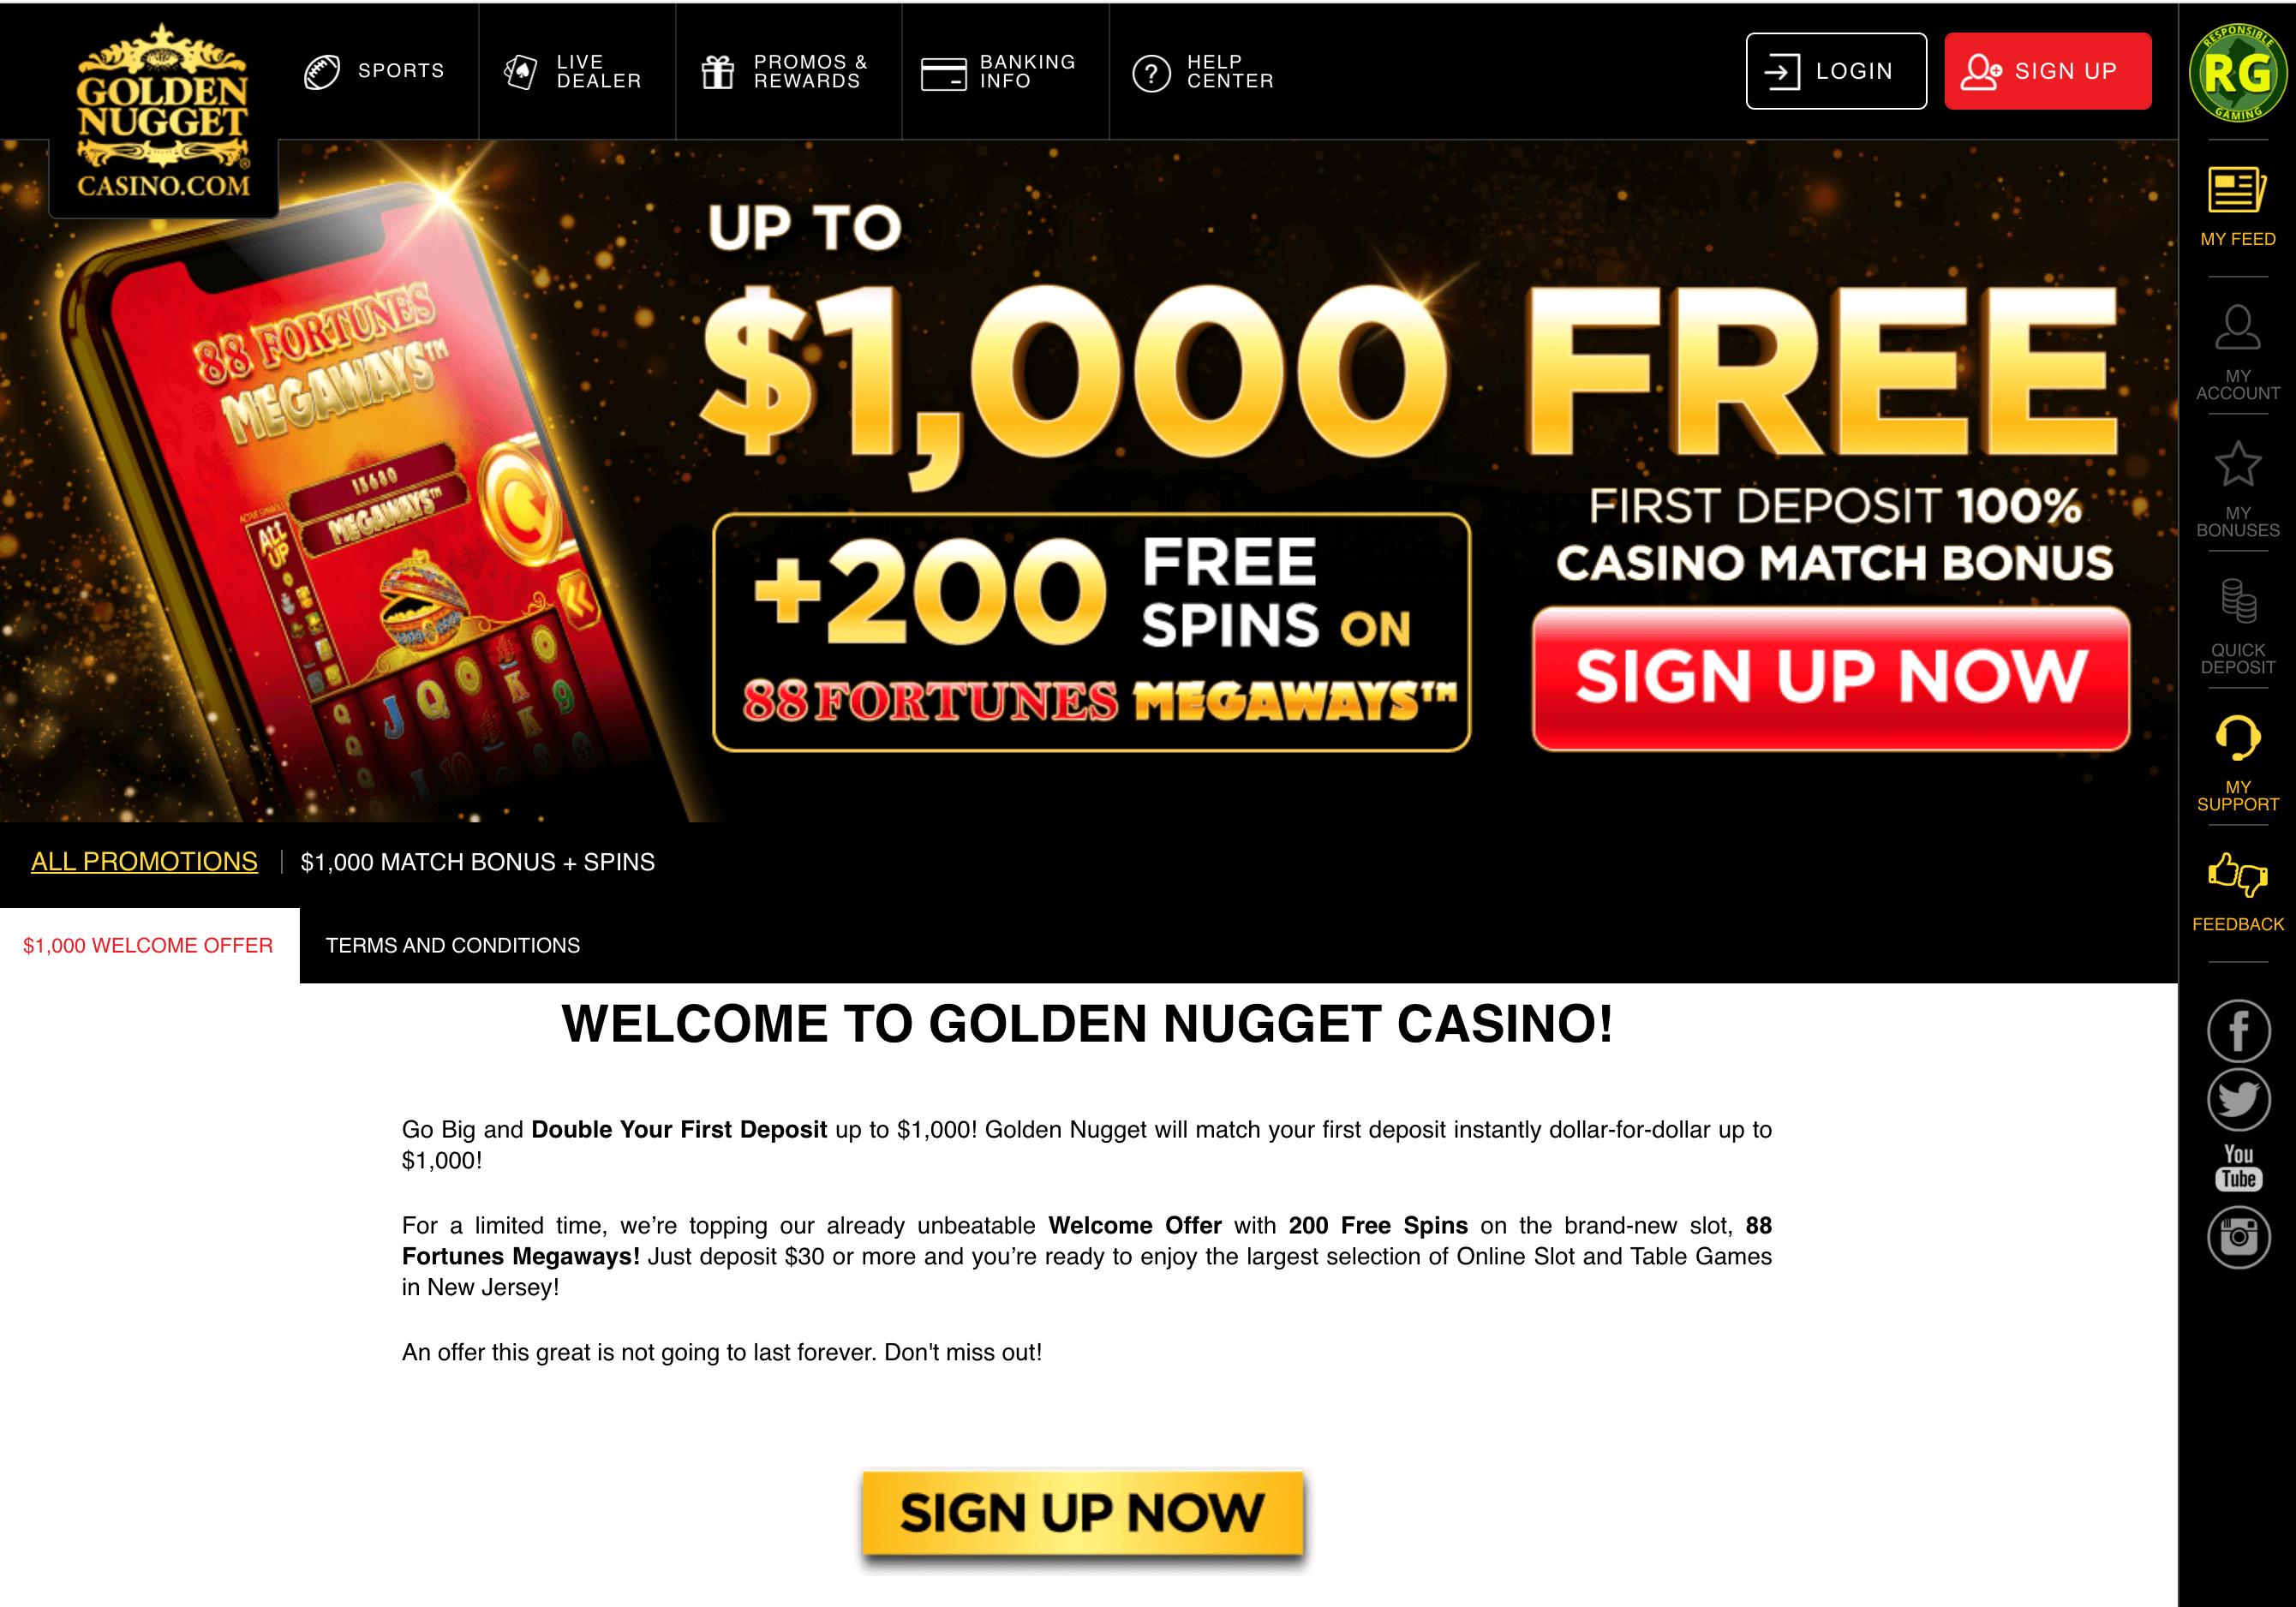 Golden Nugget Bonus Offer for New Players